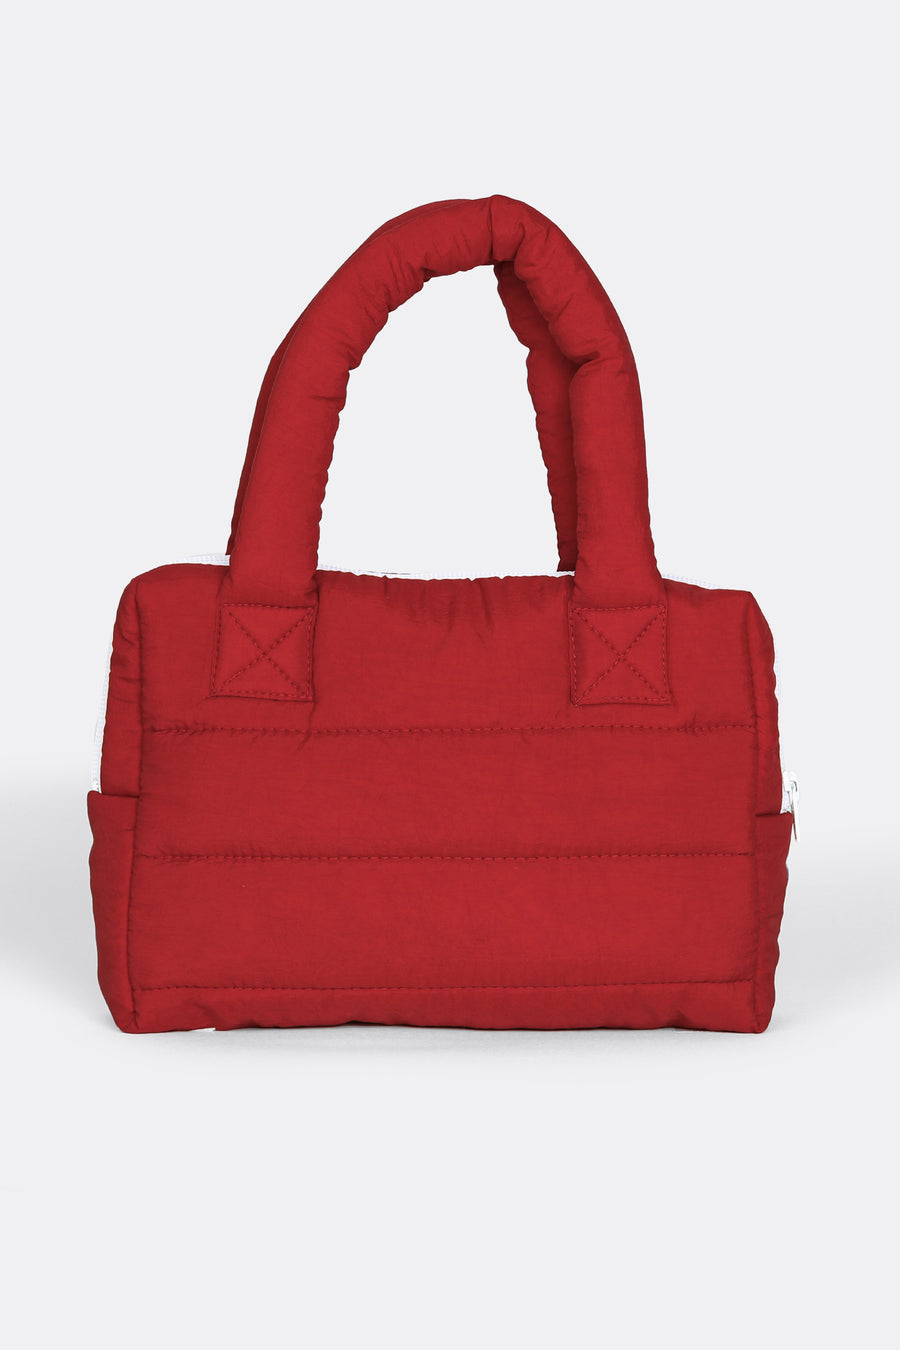 Rework Reebok Mini Puffer Bag